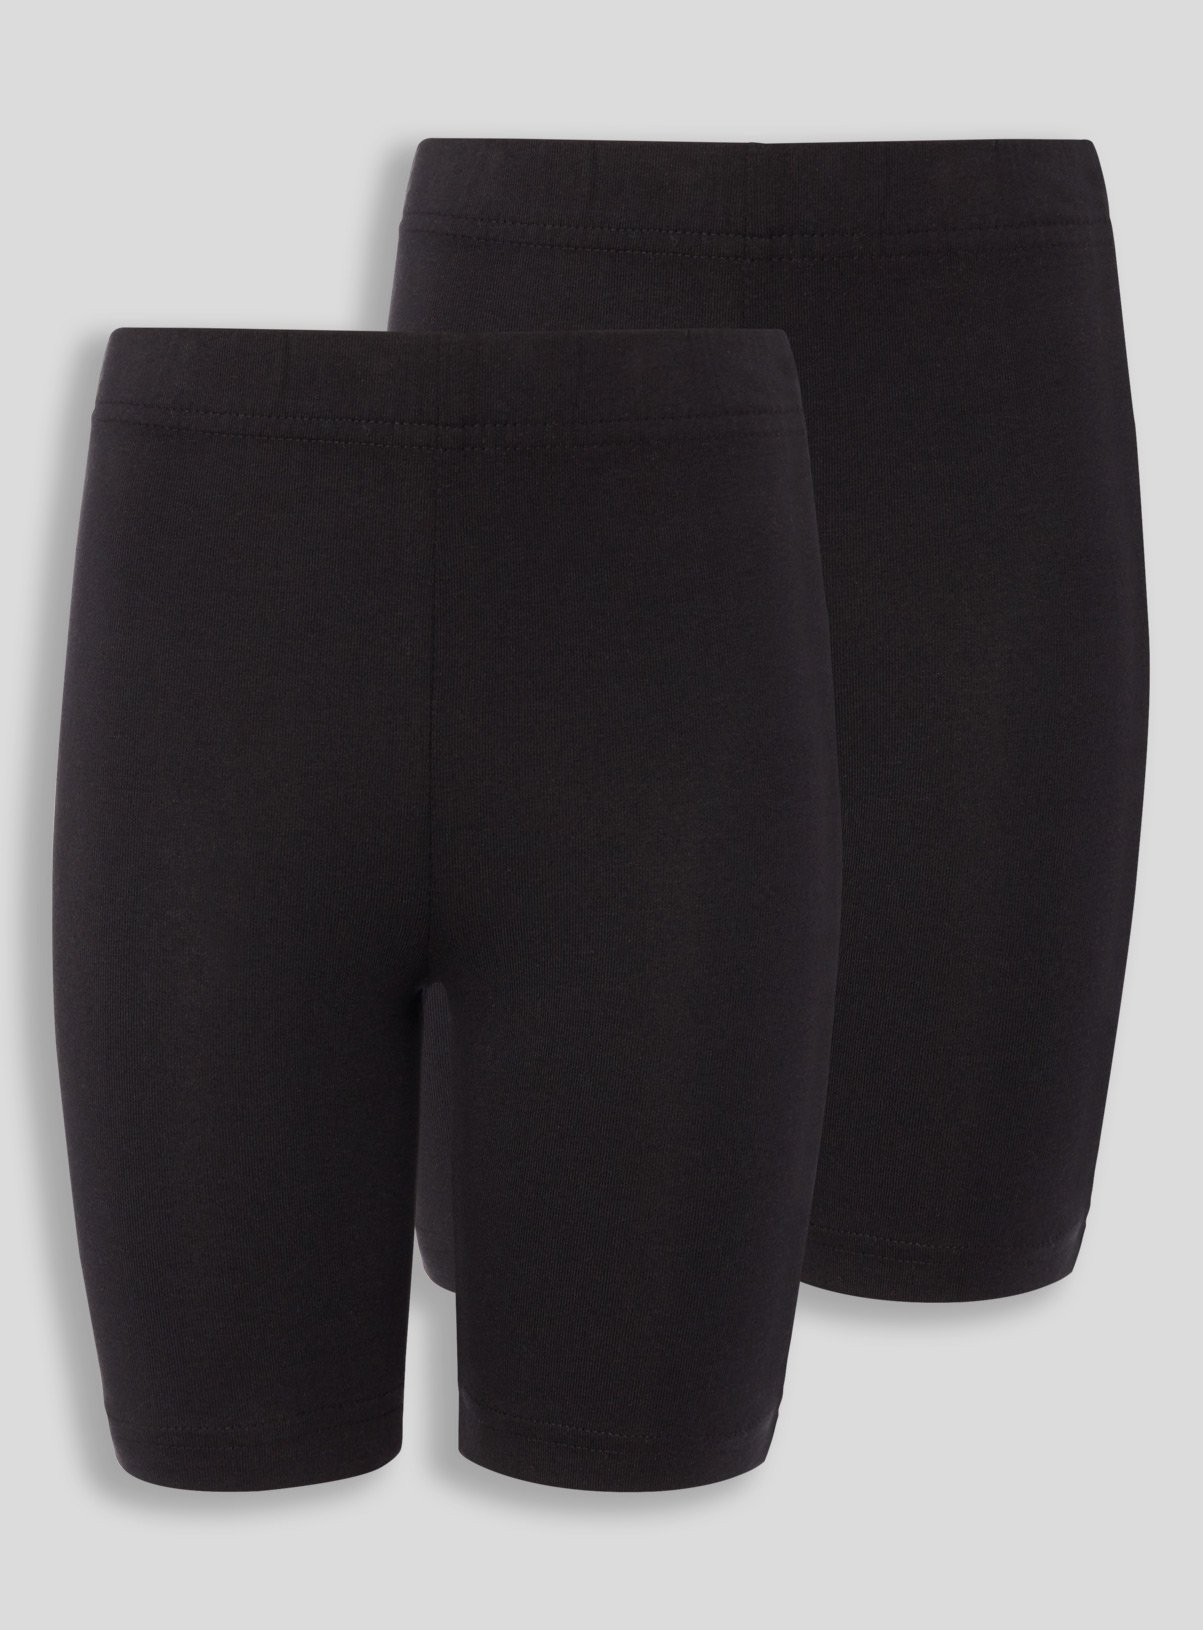 black cotton cycling shorts